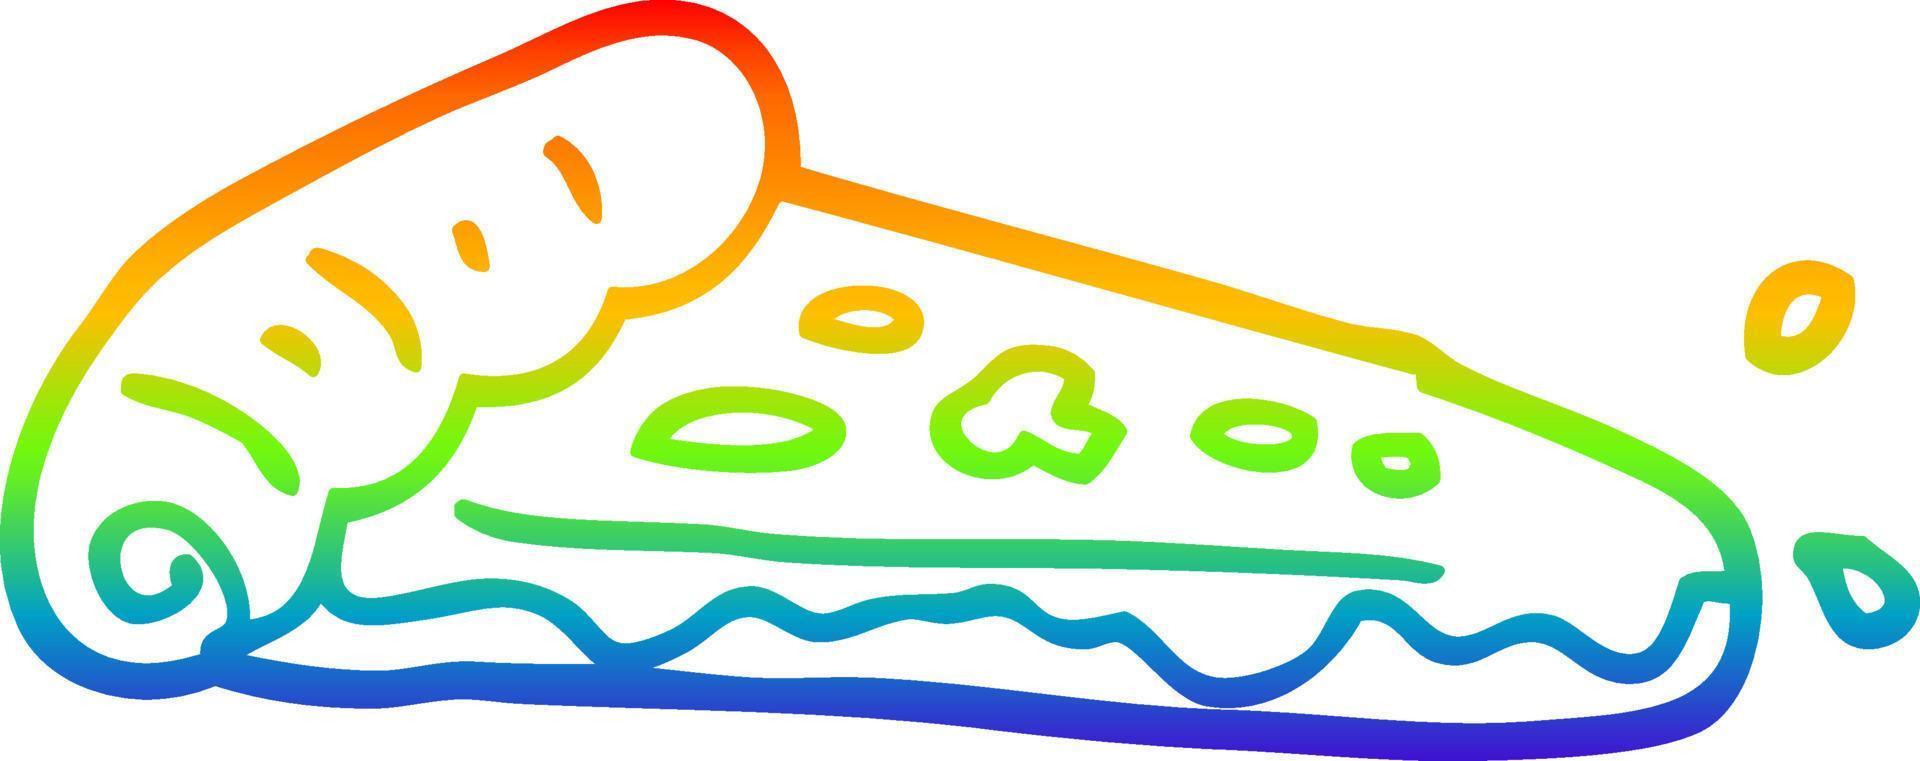 rainbow gradient line drawing cartoon pizza slice vector